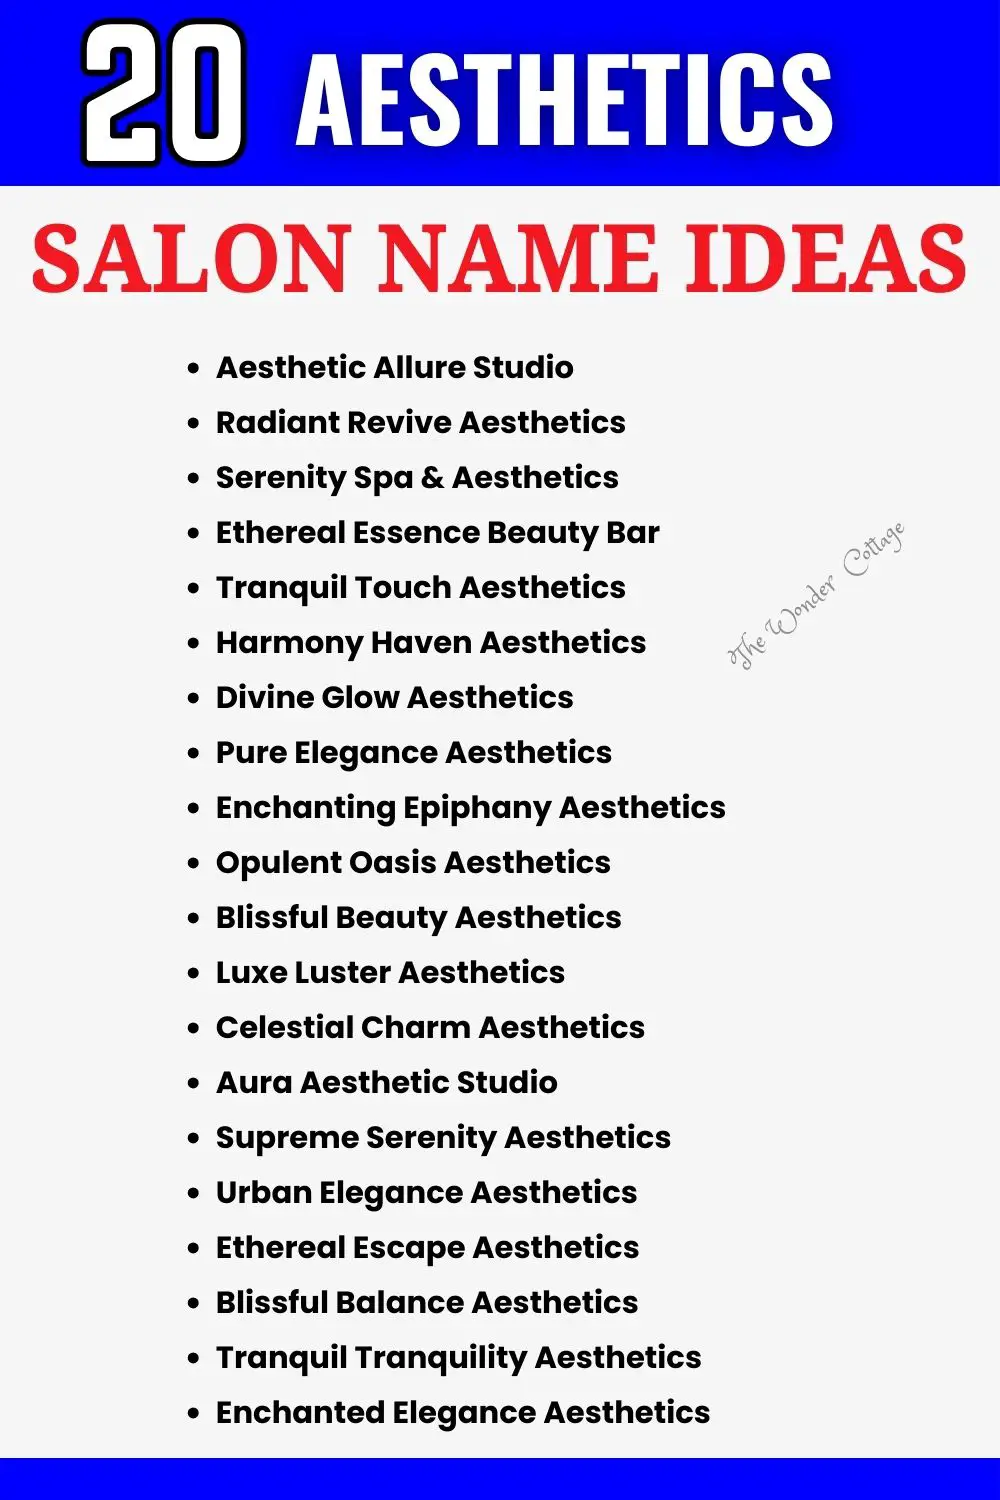 Aesthetics Salon Name Ideas